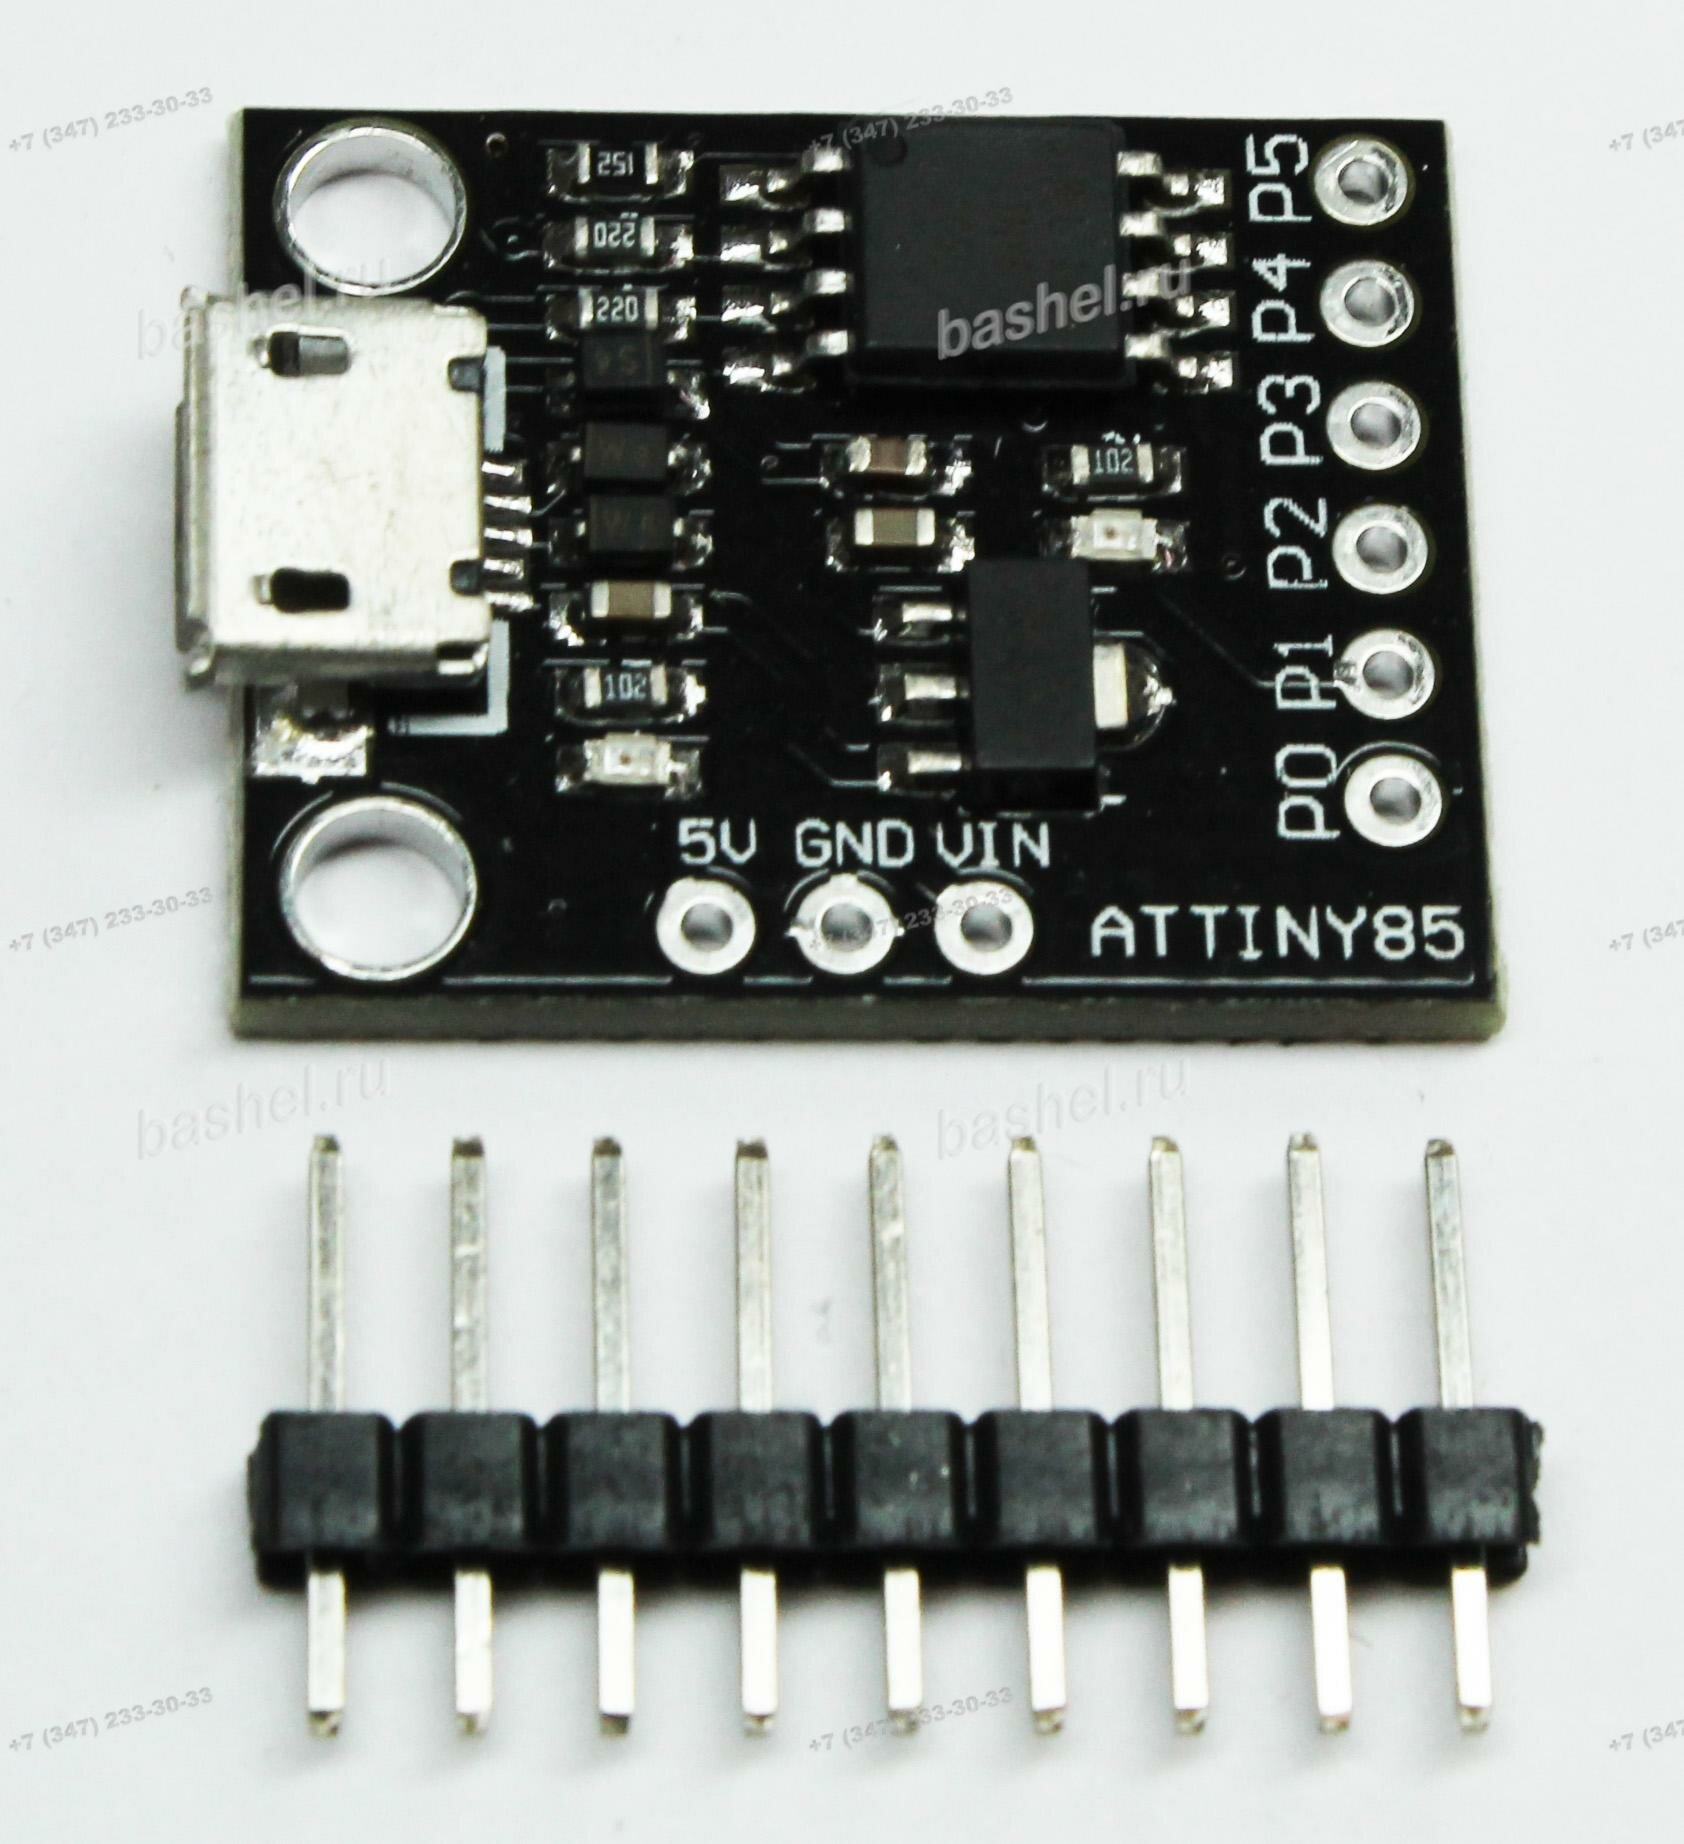 Digispark ATTINY85 Micro USB Встраиваемый МК модуль на базе МК ATtiny85